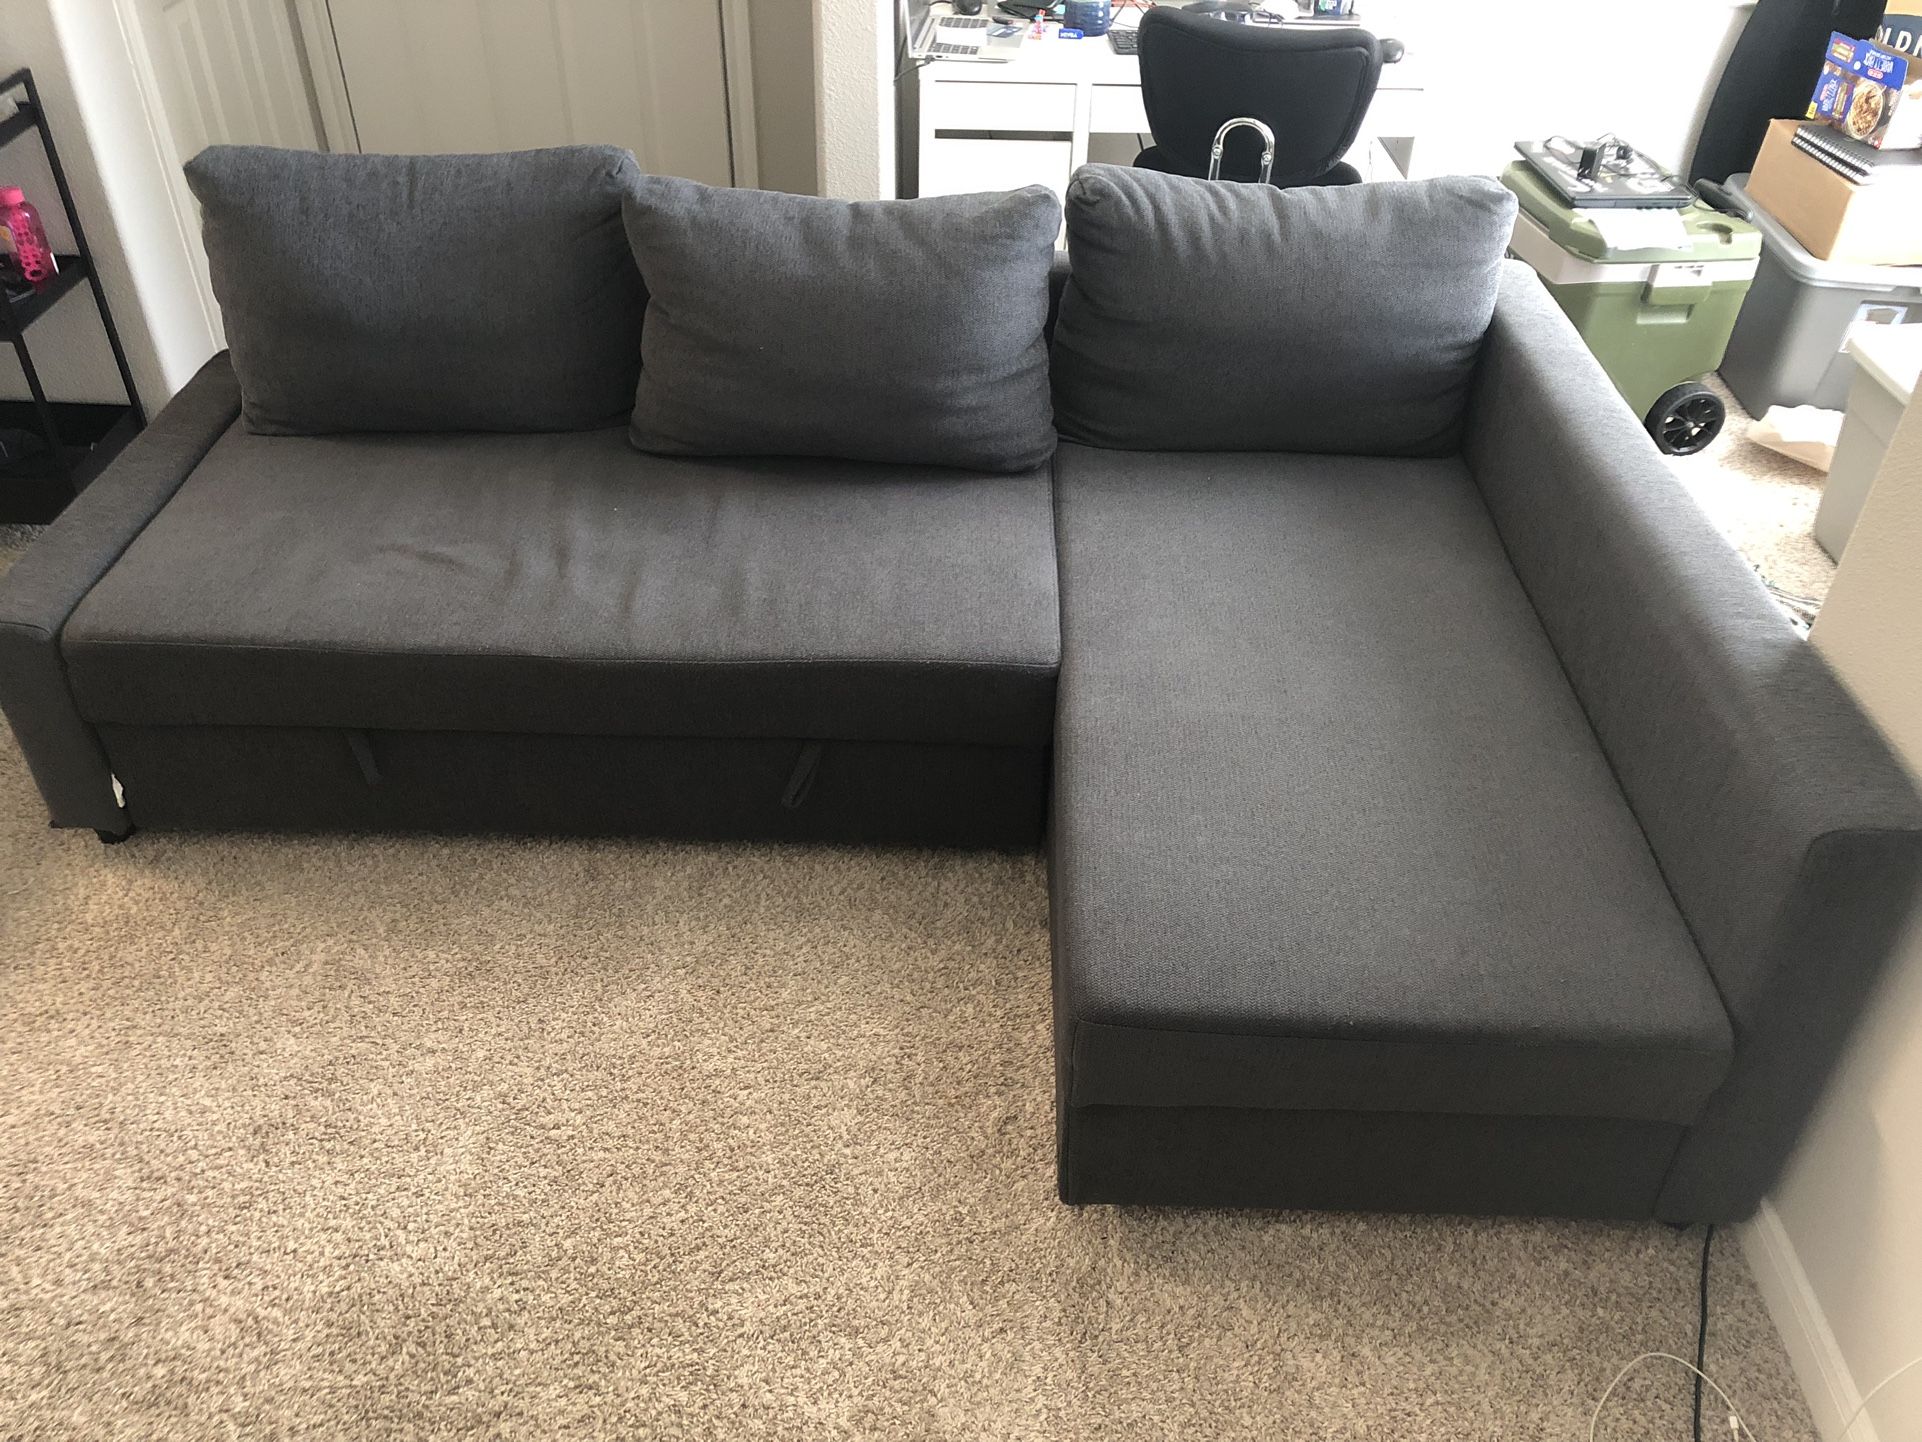 IKEA Sleeper Sofa With Storage And Chaise